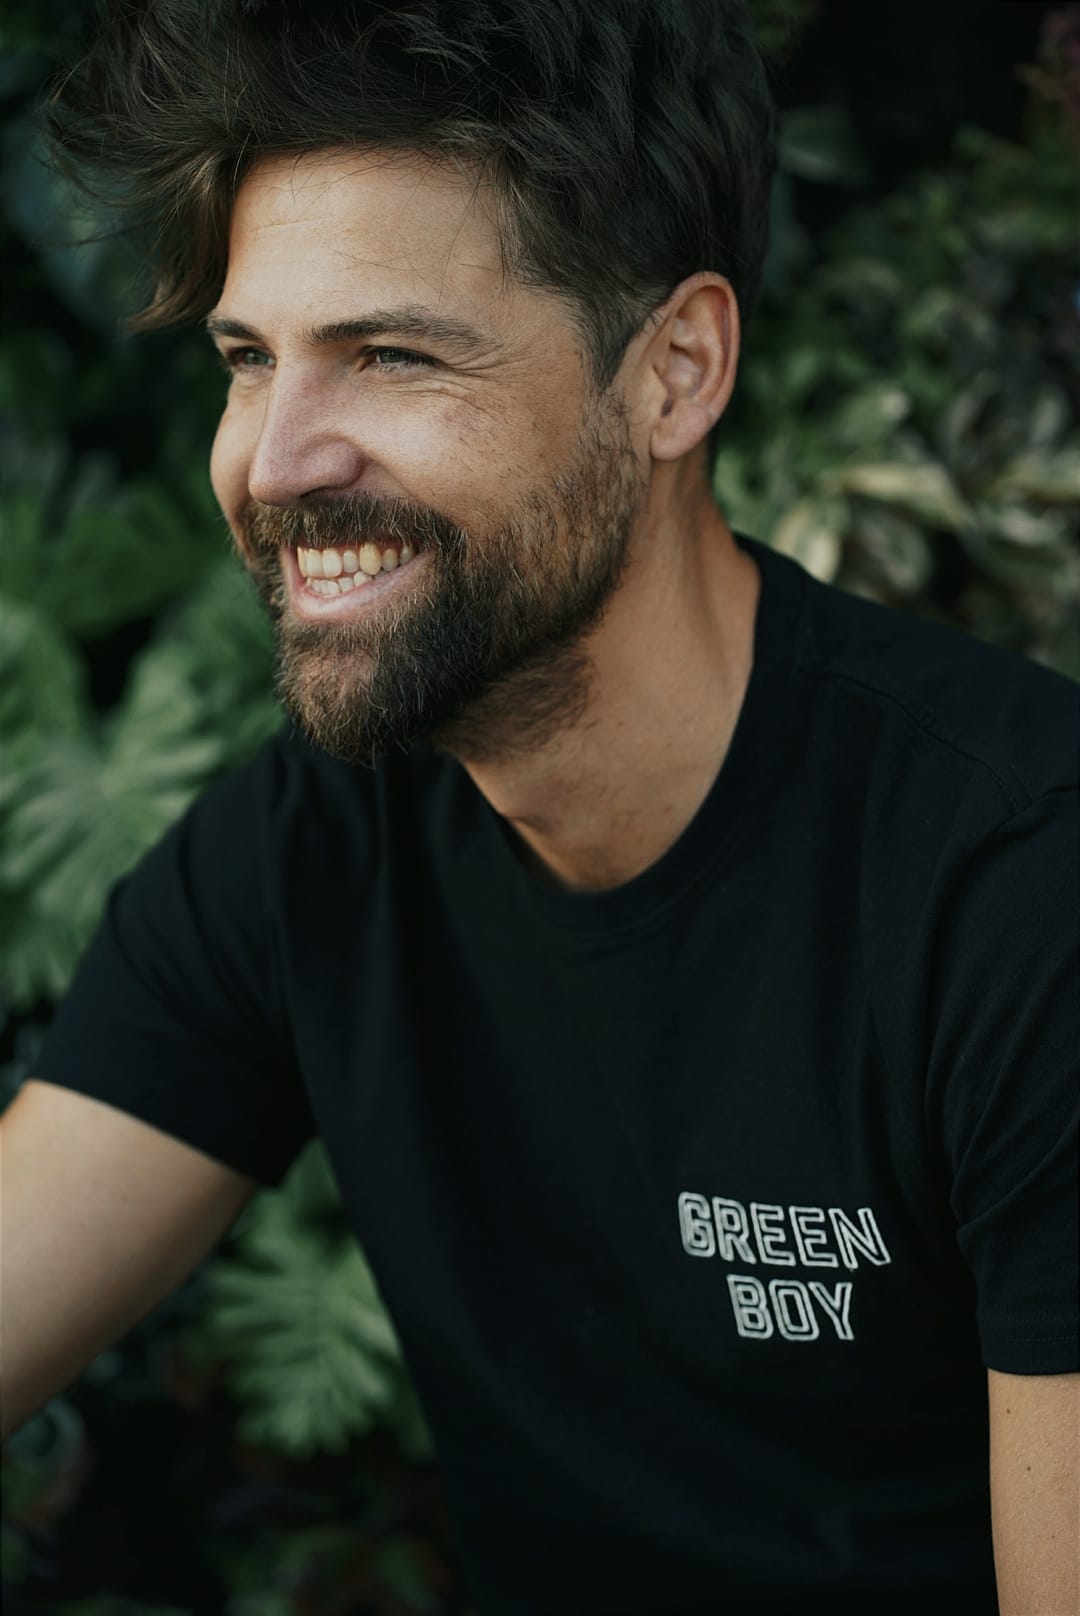 Green Boy T-Shirt - 100% Recycled Cotton